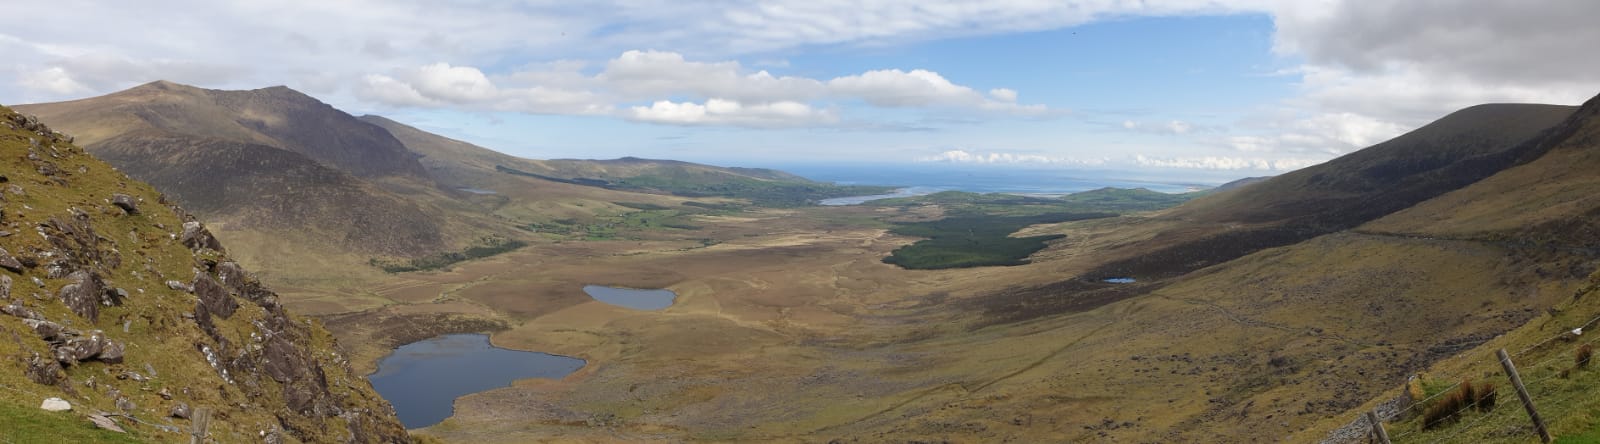 Nigel Allen VW - Panoramic Irish Mountain views - Cape to cape